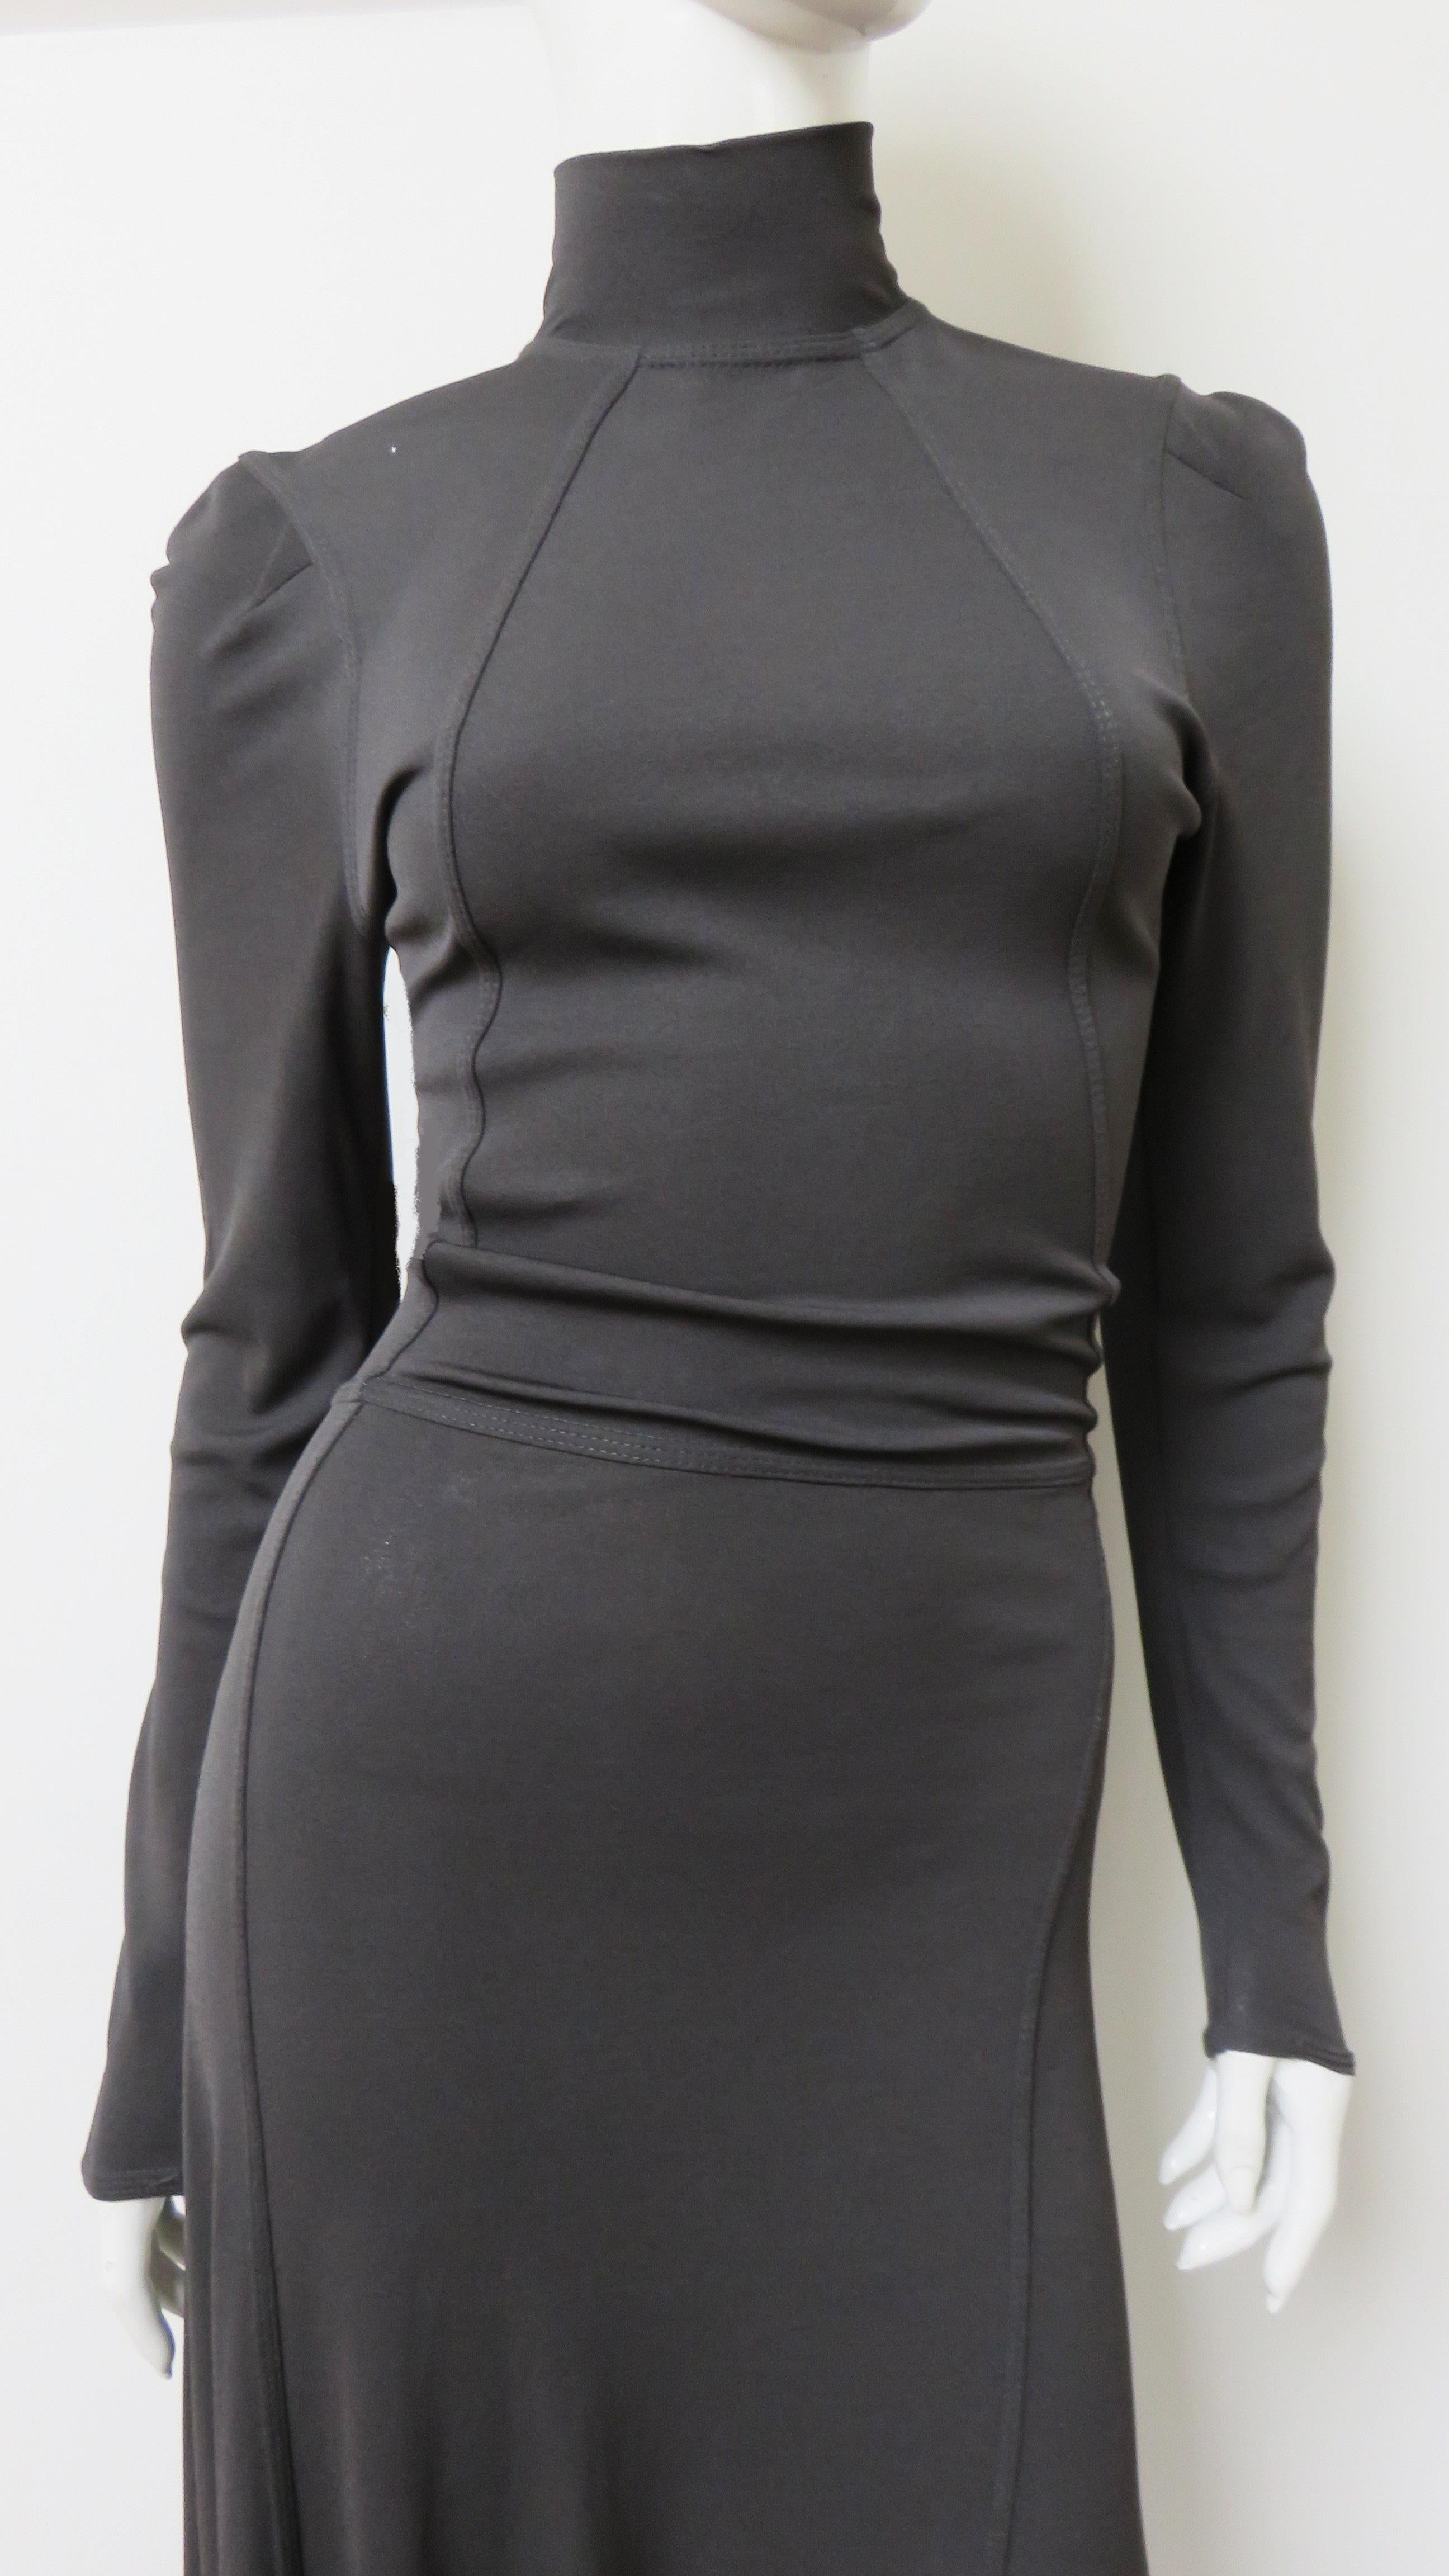 zipper back dress 50 shades of grey